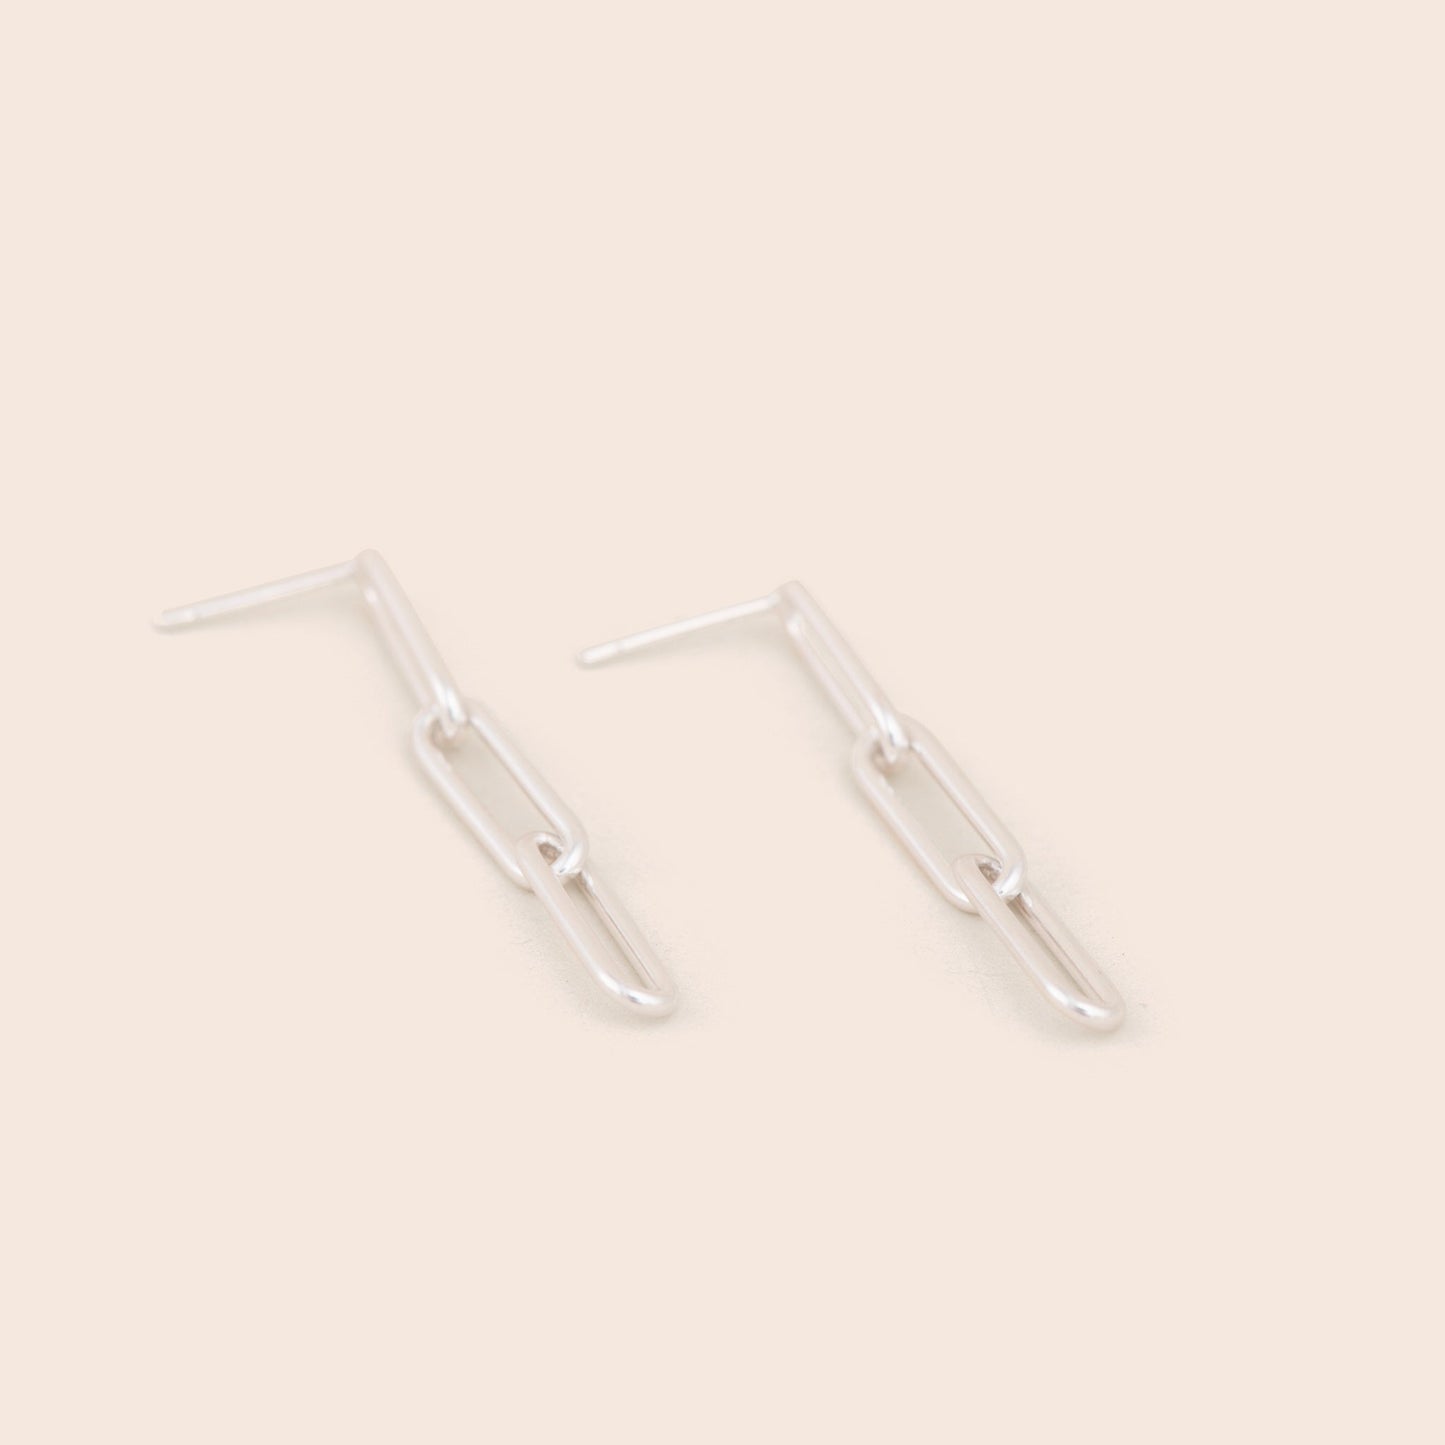 Silver Paperclip Chain Link Stud Earrings - Gemlet